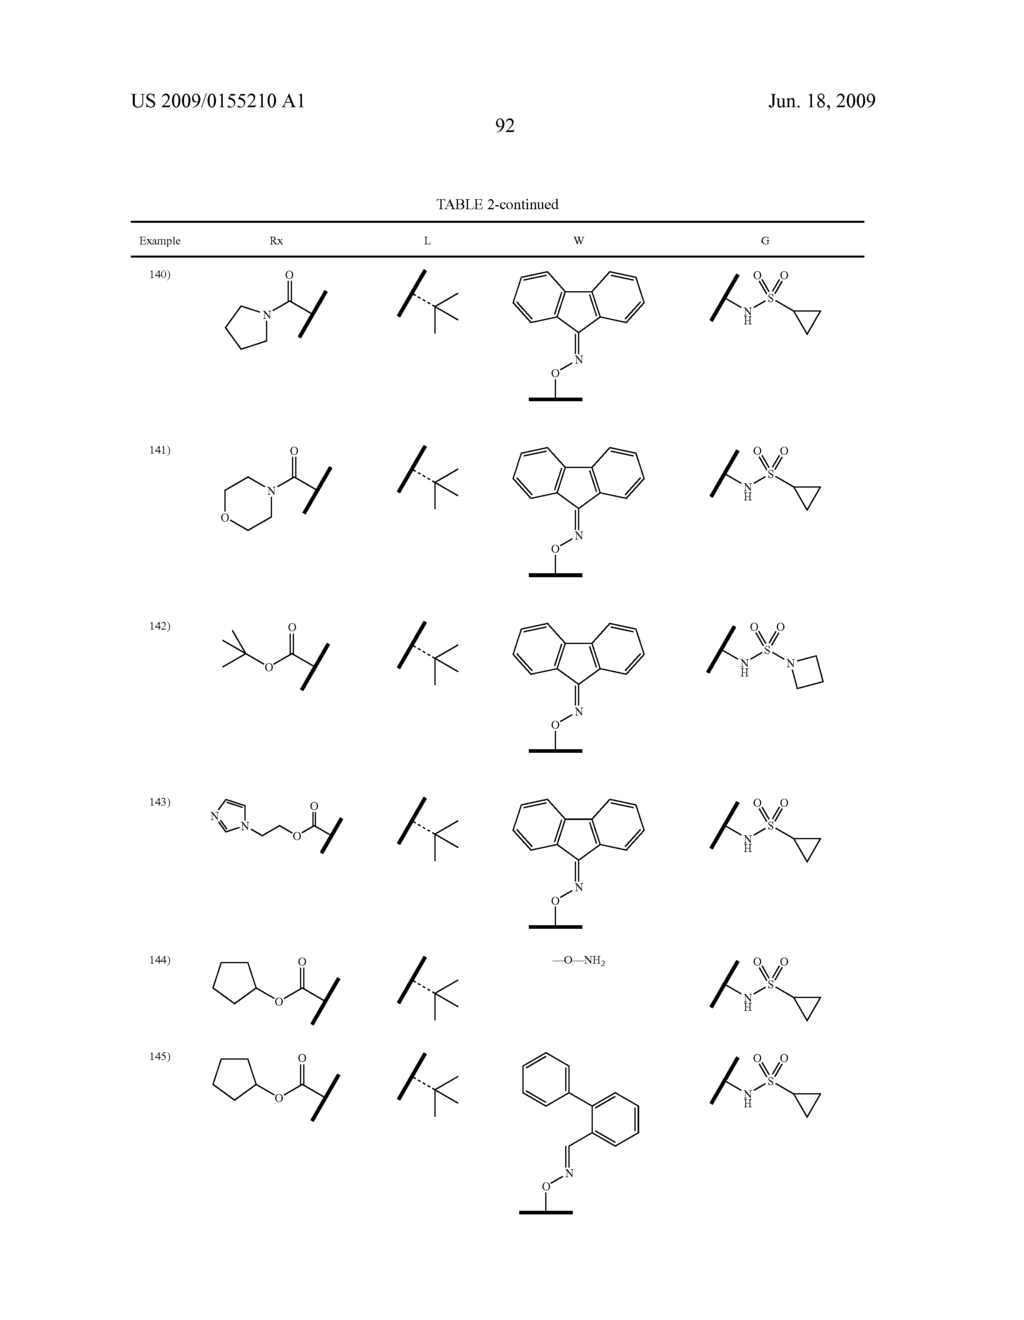 OXIMYL HCV SERINE PROTEASE INHIBITORS - diagram, schematic, and image 93